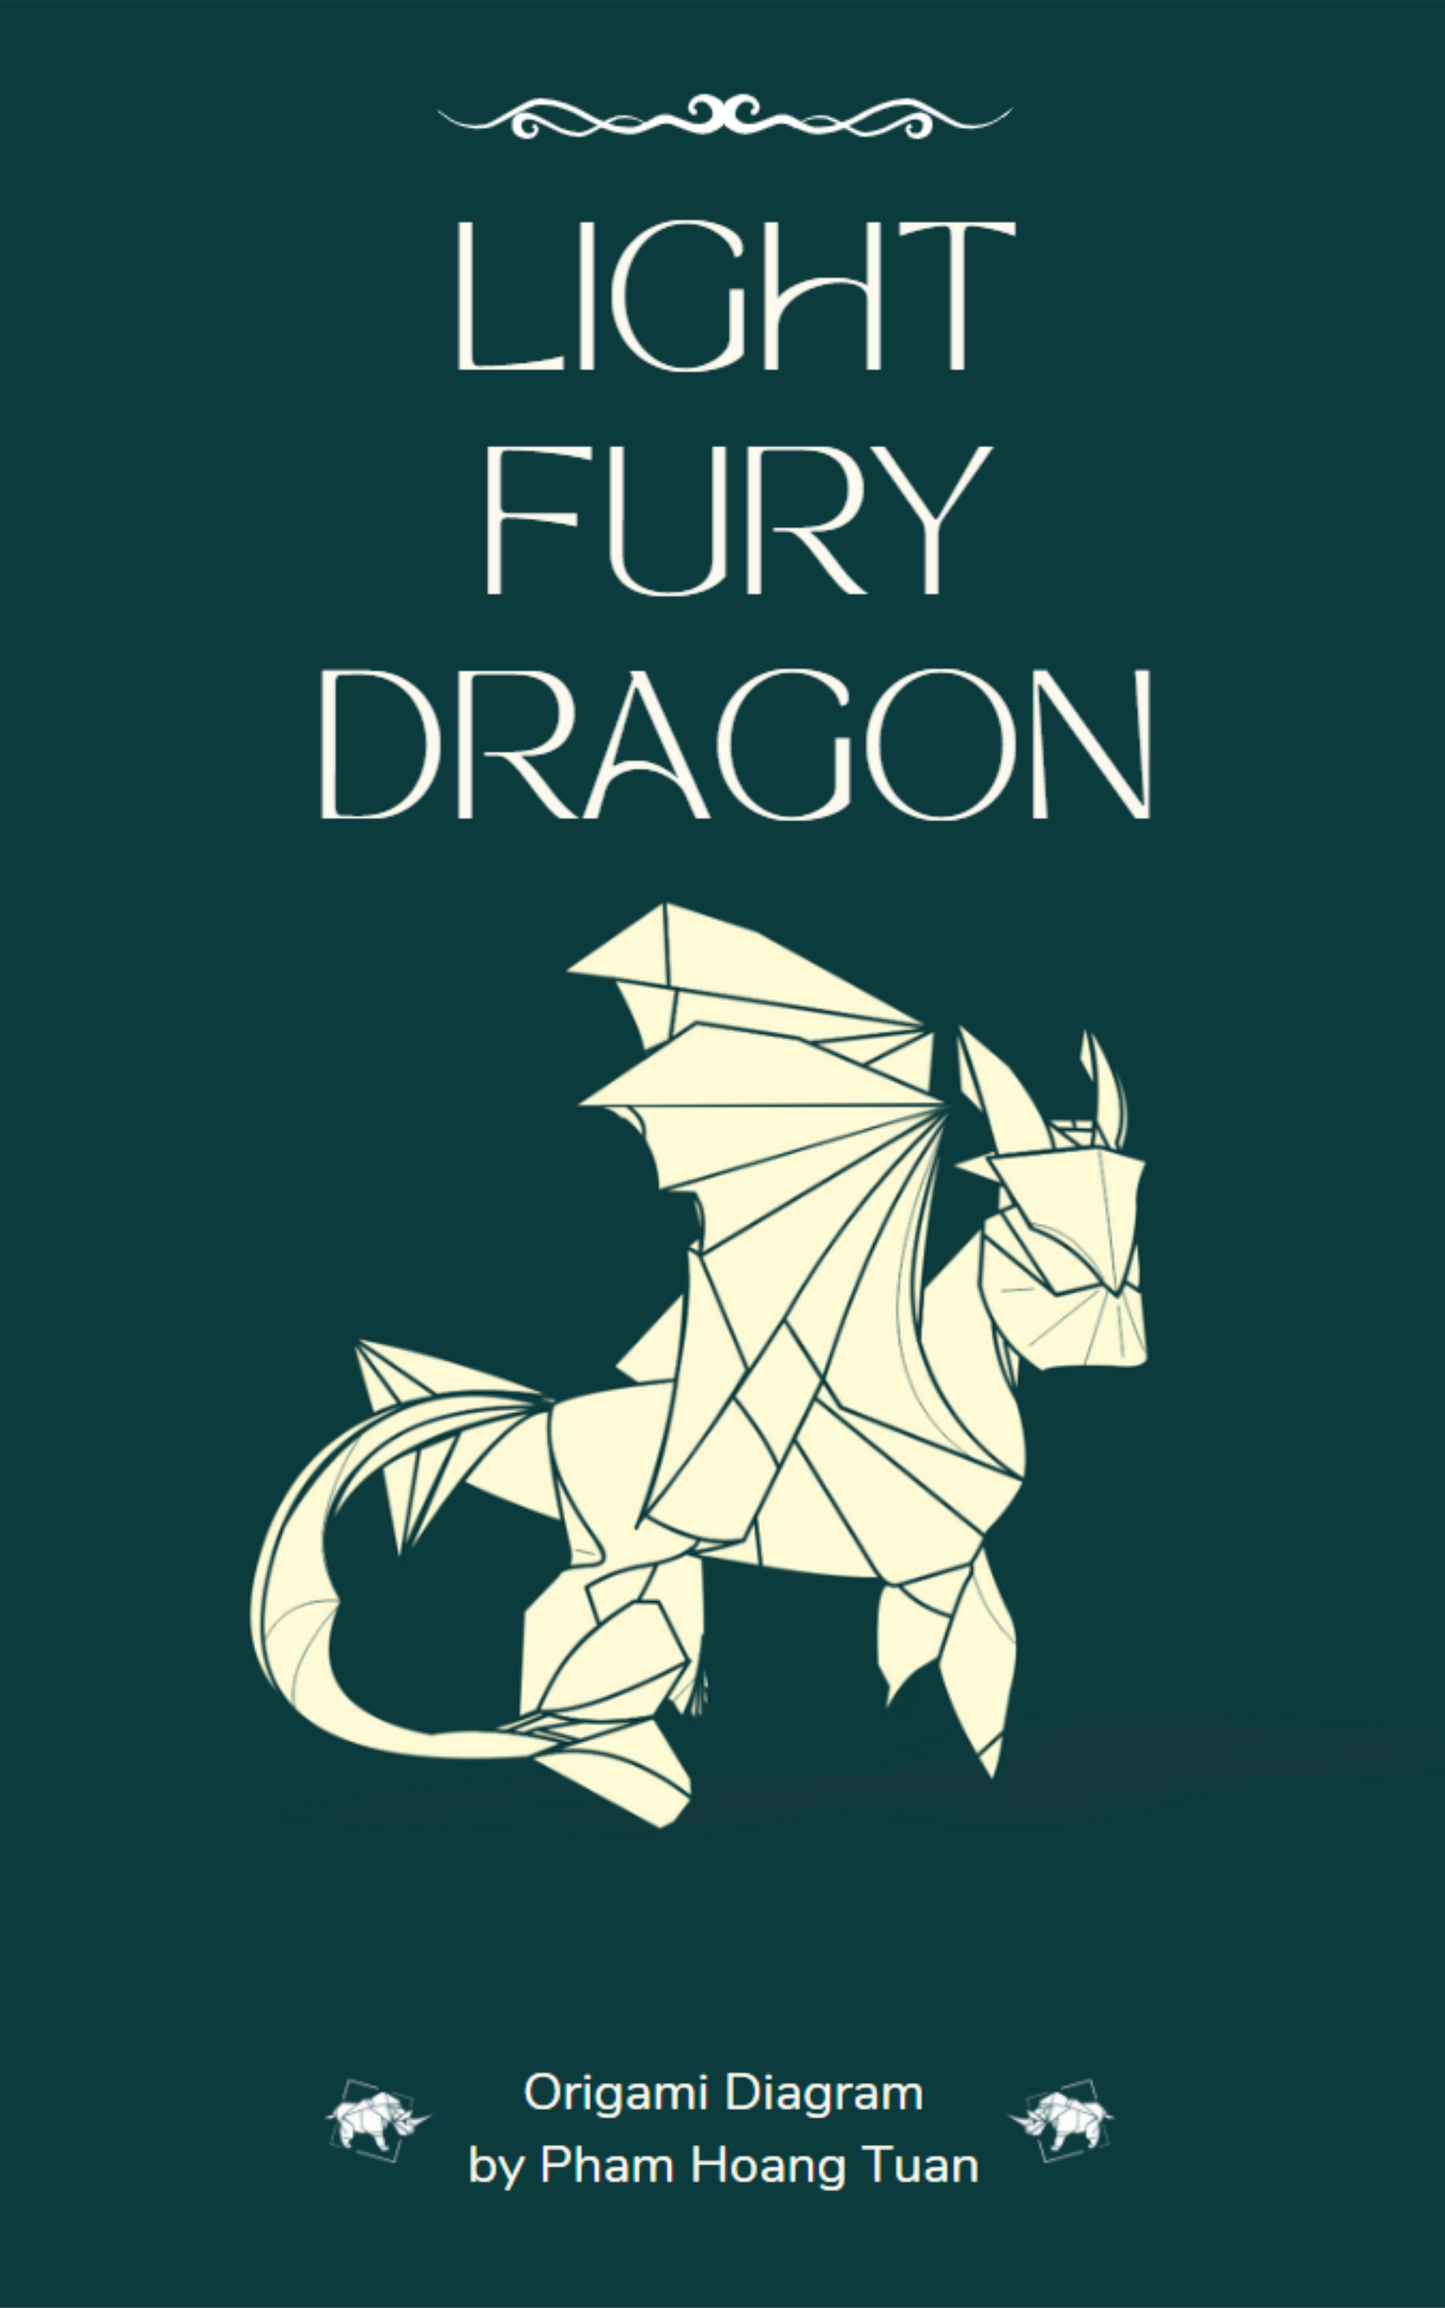 Origami Dragon Instruction Diagram - Origami Light Fury Dragon Ebook